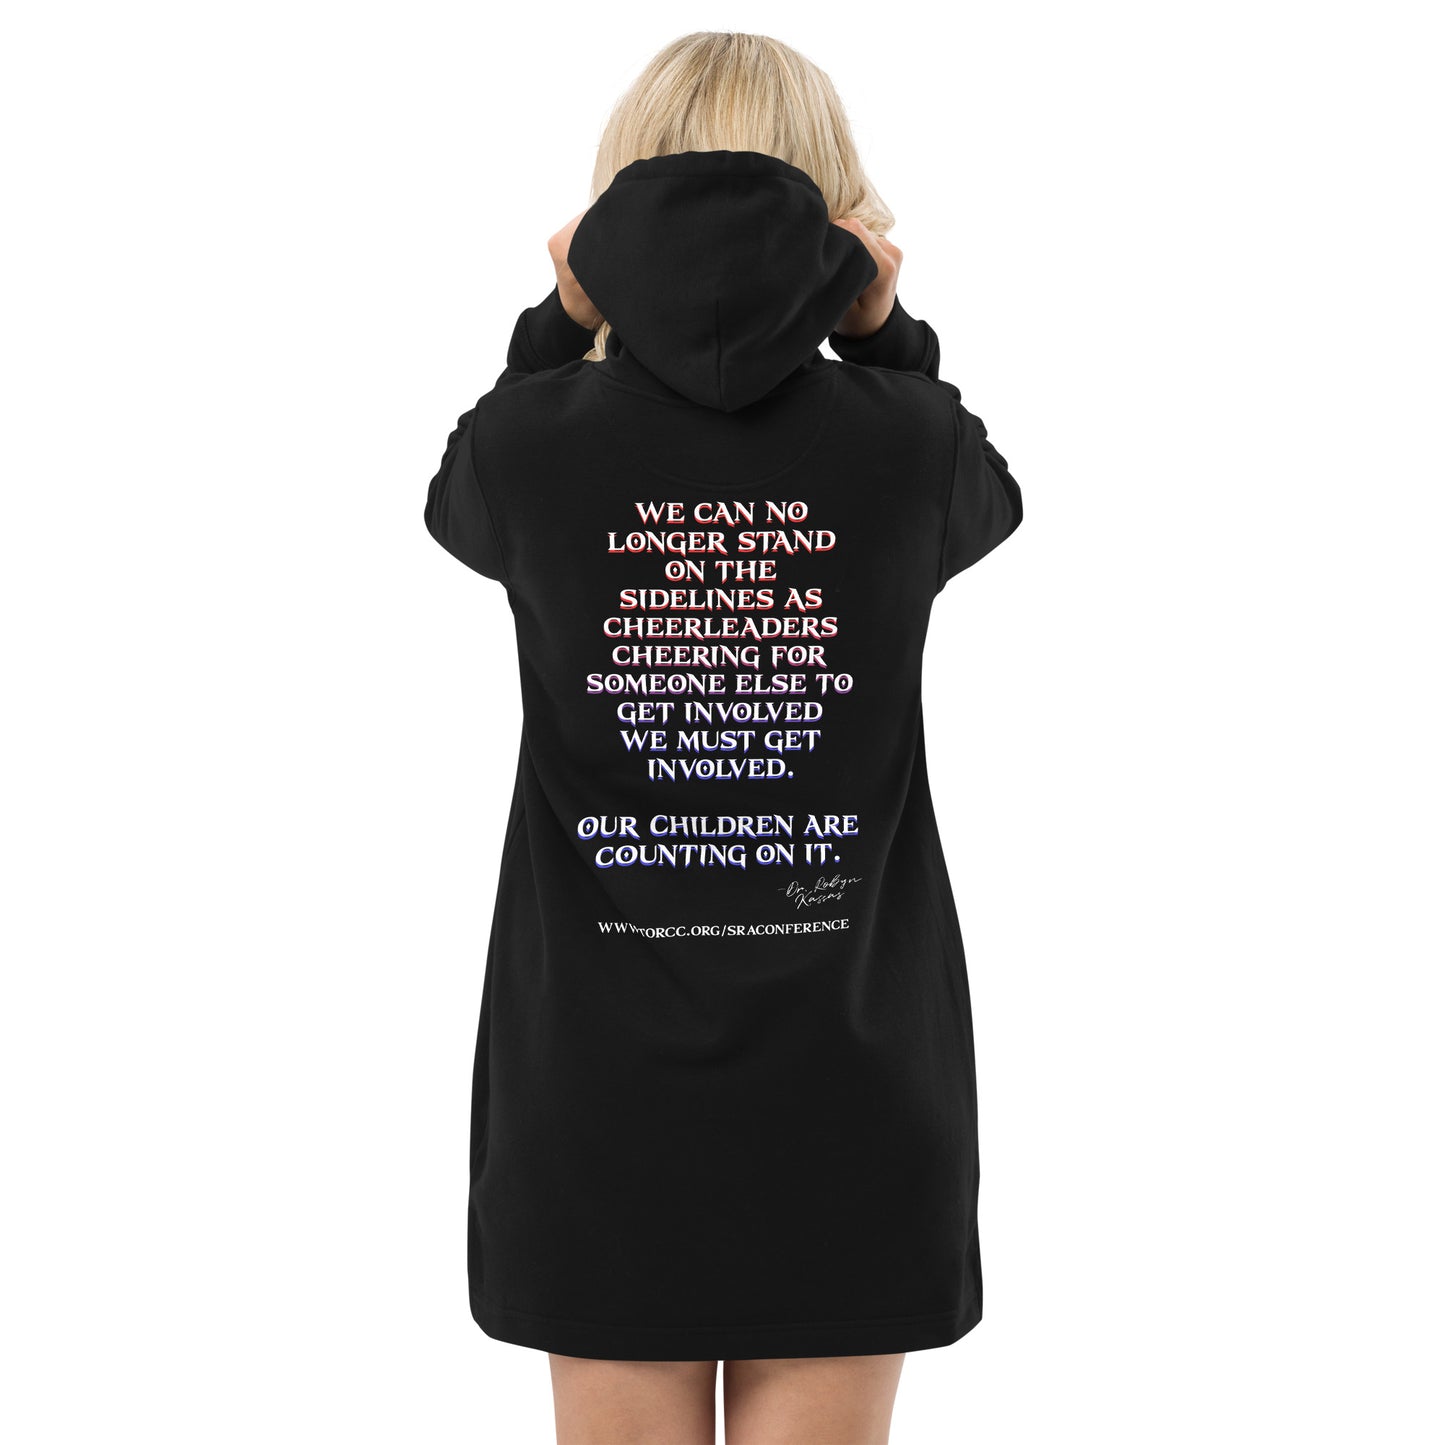 "Not On My Watch" - SRA Statement Women's Hoodie Dress